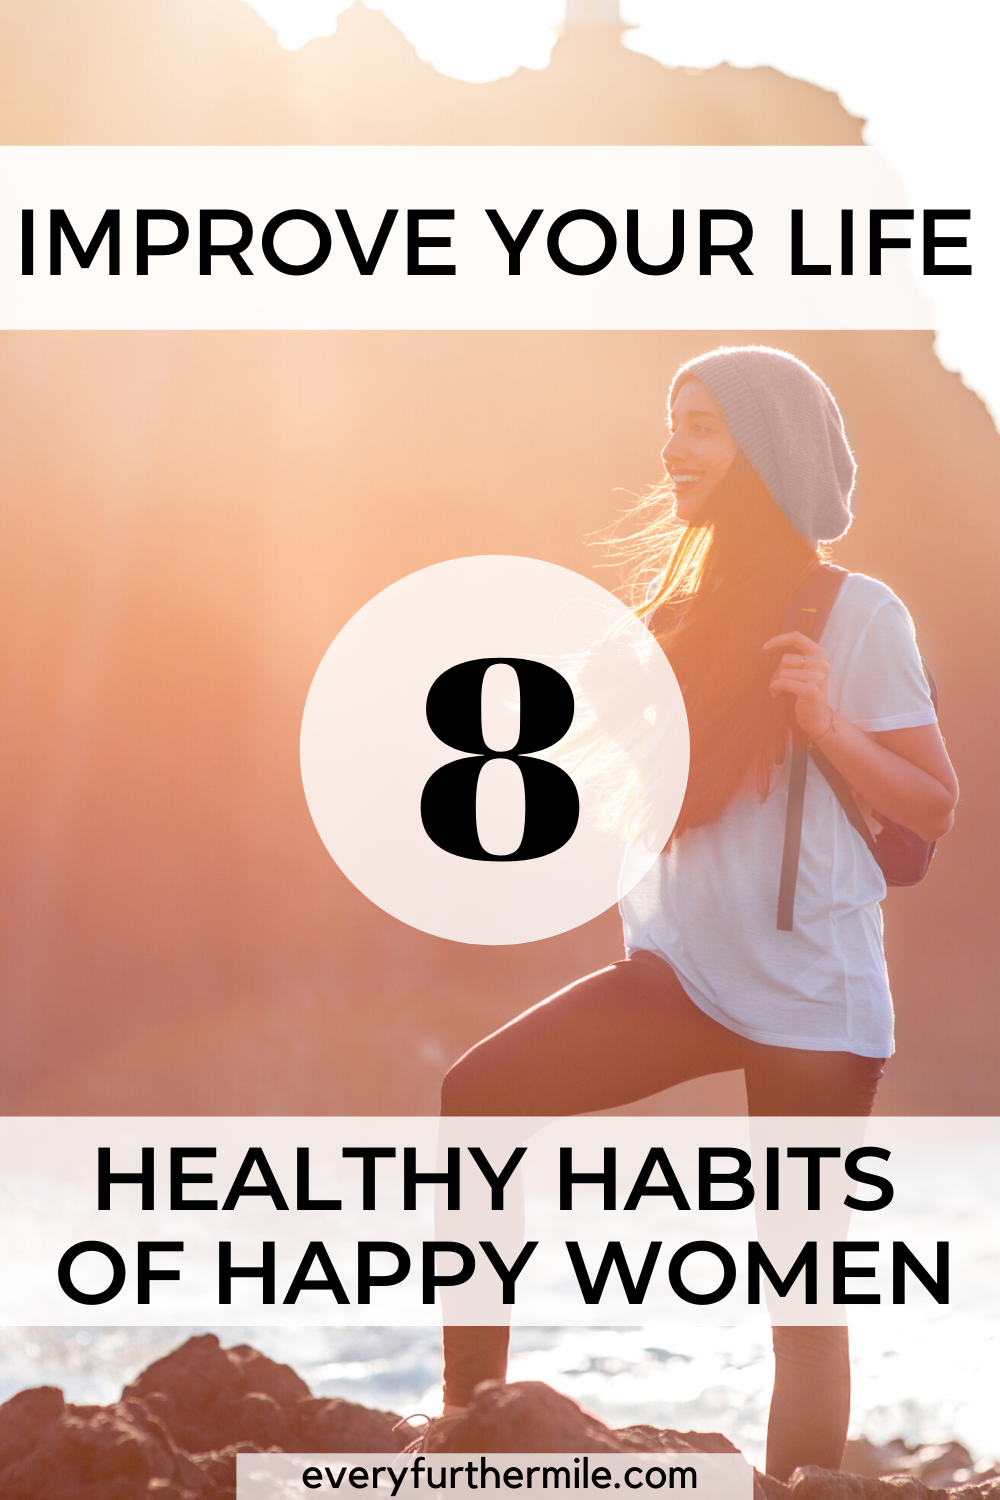 8 Healthy Habits of Happy Women - everyfurthermile